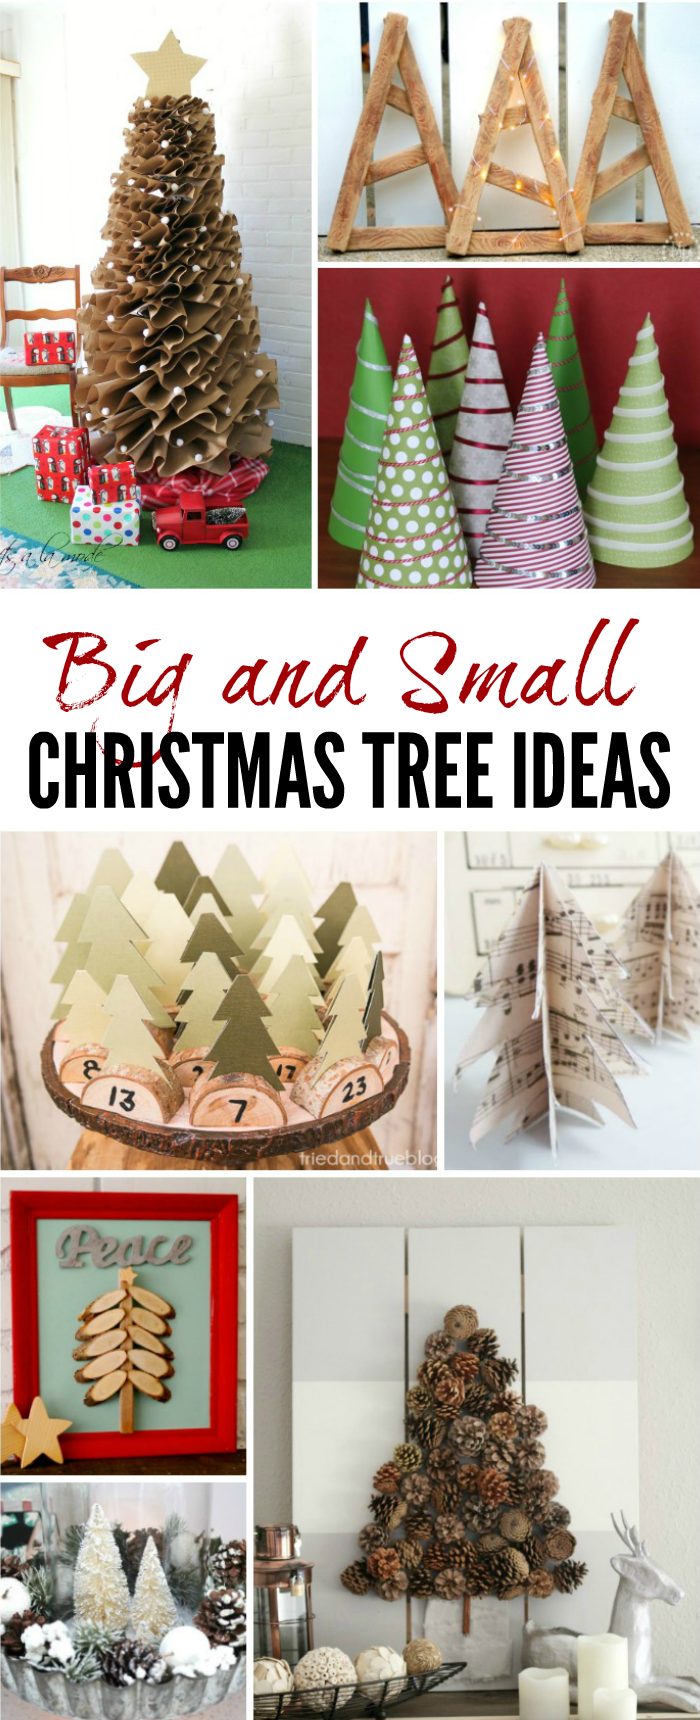 Big and Small Christmas Tree Ideas